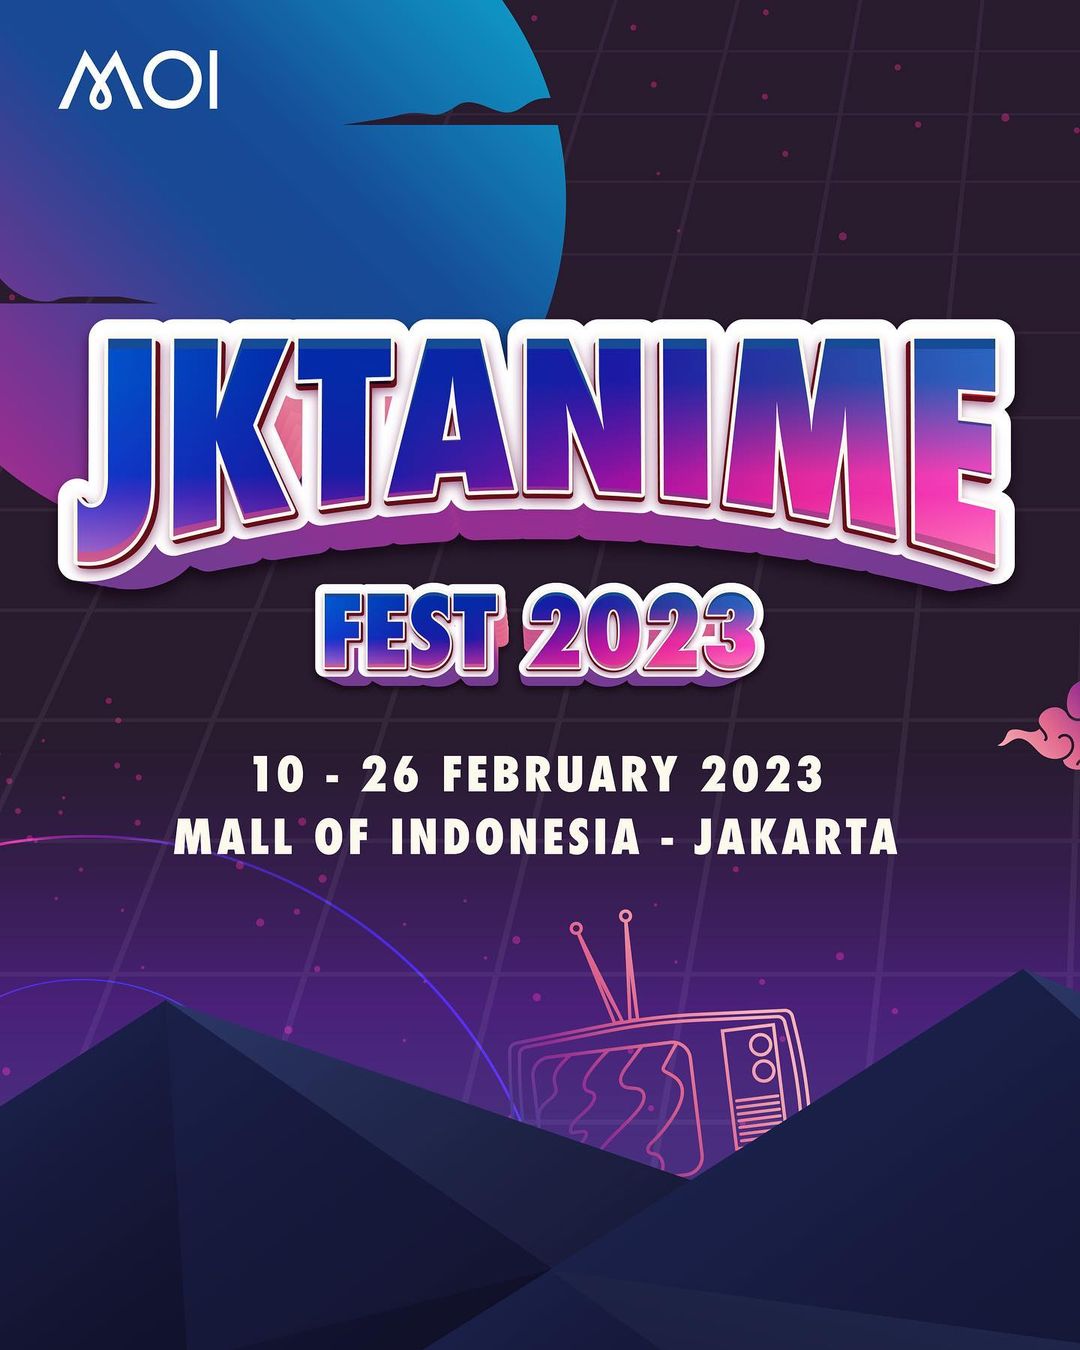 MALL OF INDONESIA present JKTANIME FEST 2023